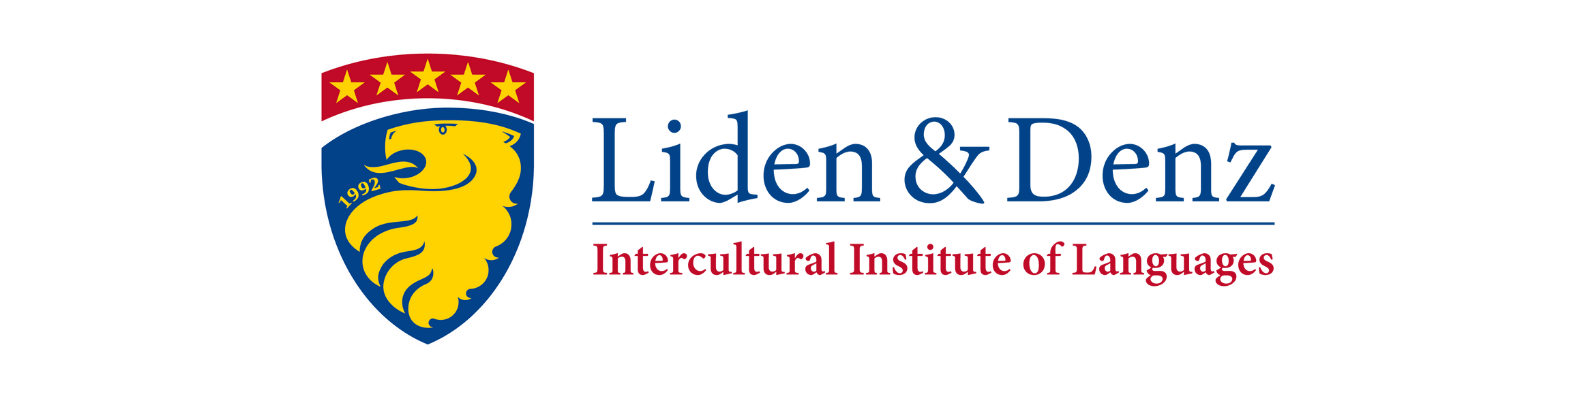 Liden & Denz Intercultural Institute of Languages | IFG Foundation